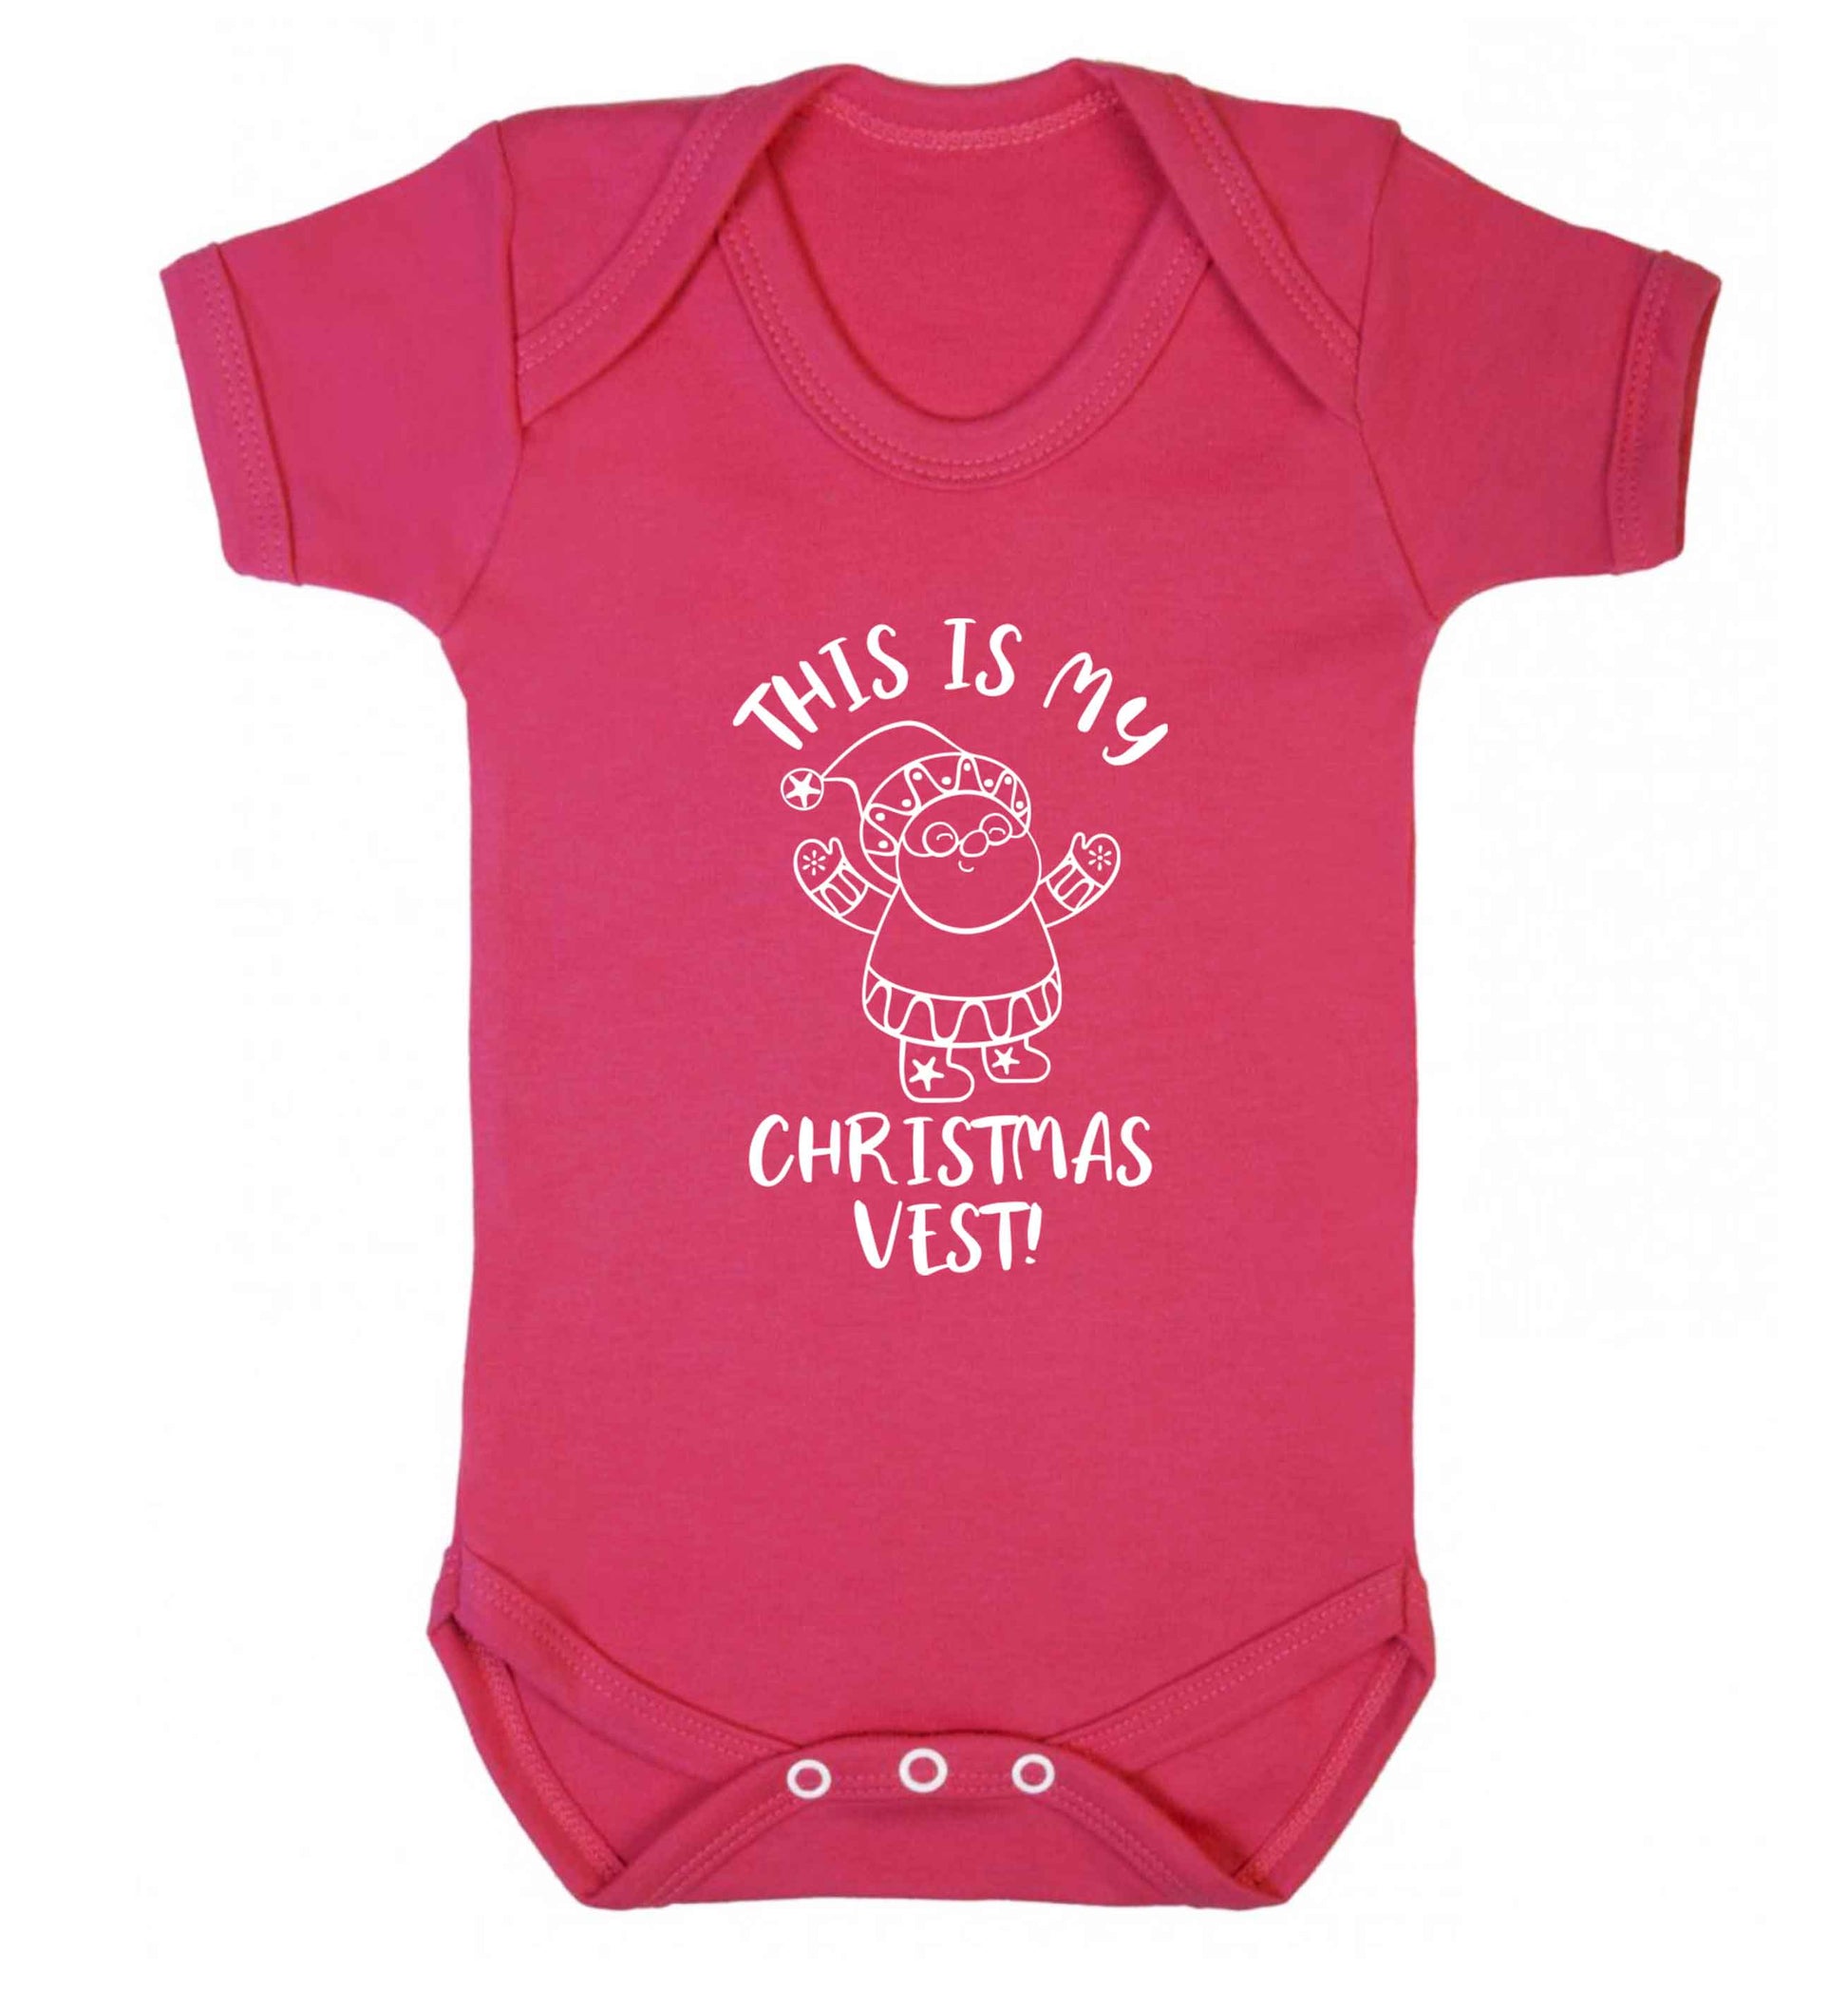 This is my Christmas vest Baby Vest dark pink 18-24 months